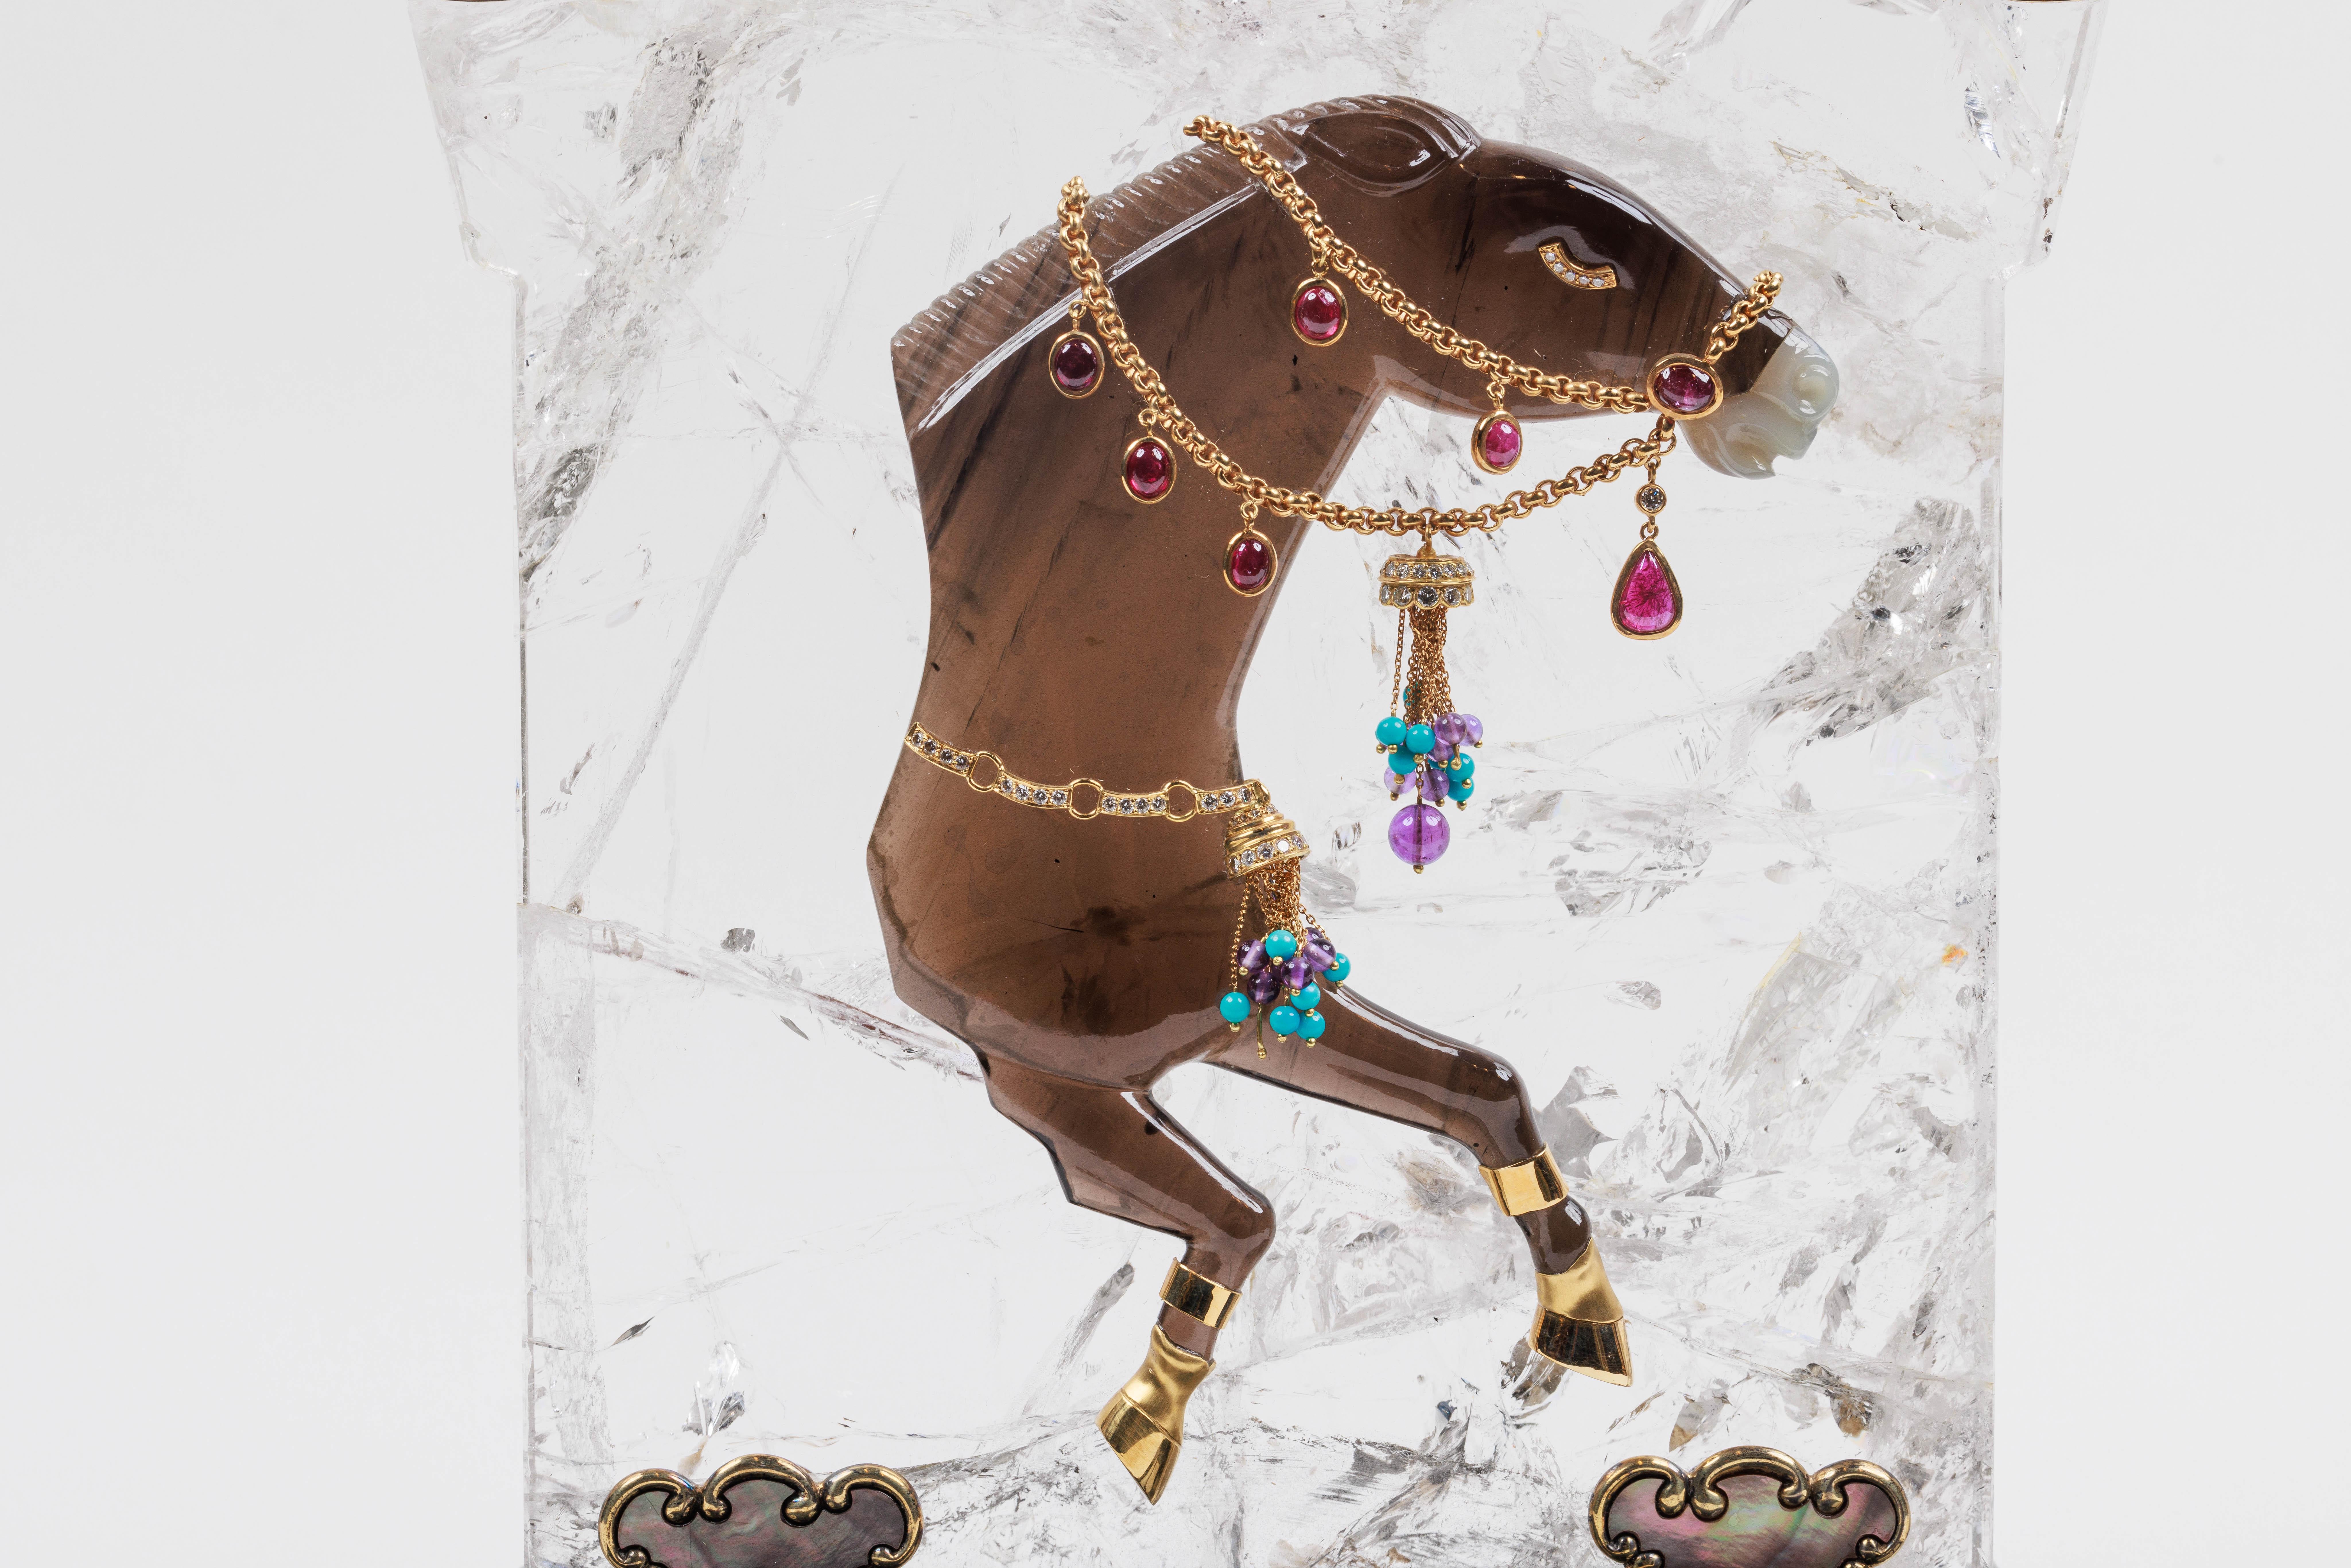 Mellerio Paris, A French Gold, Diamonds, Silver, and Smoky Quartz Carved Horse For Sale 1